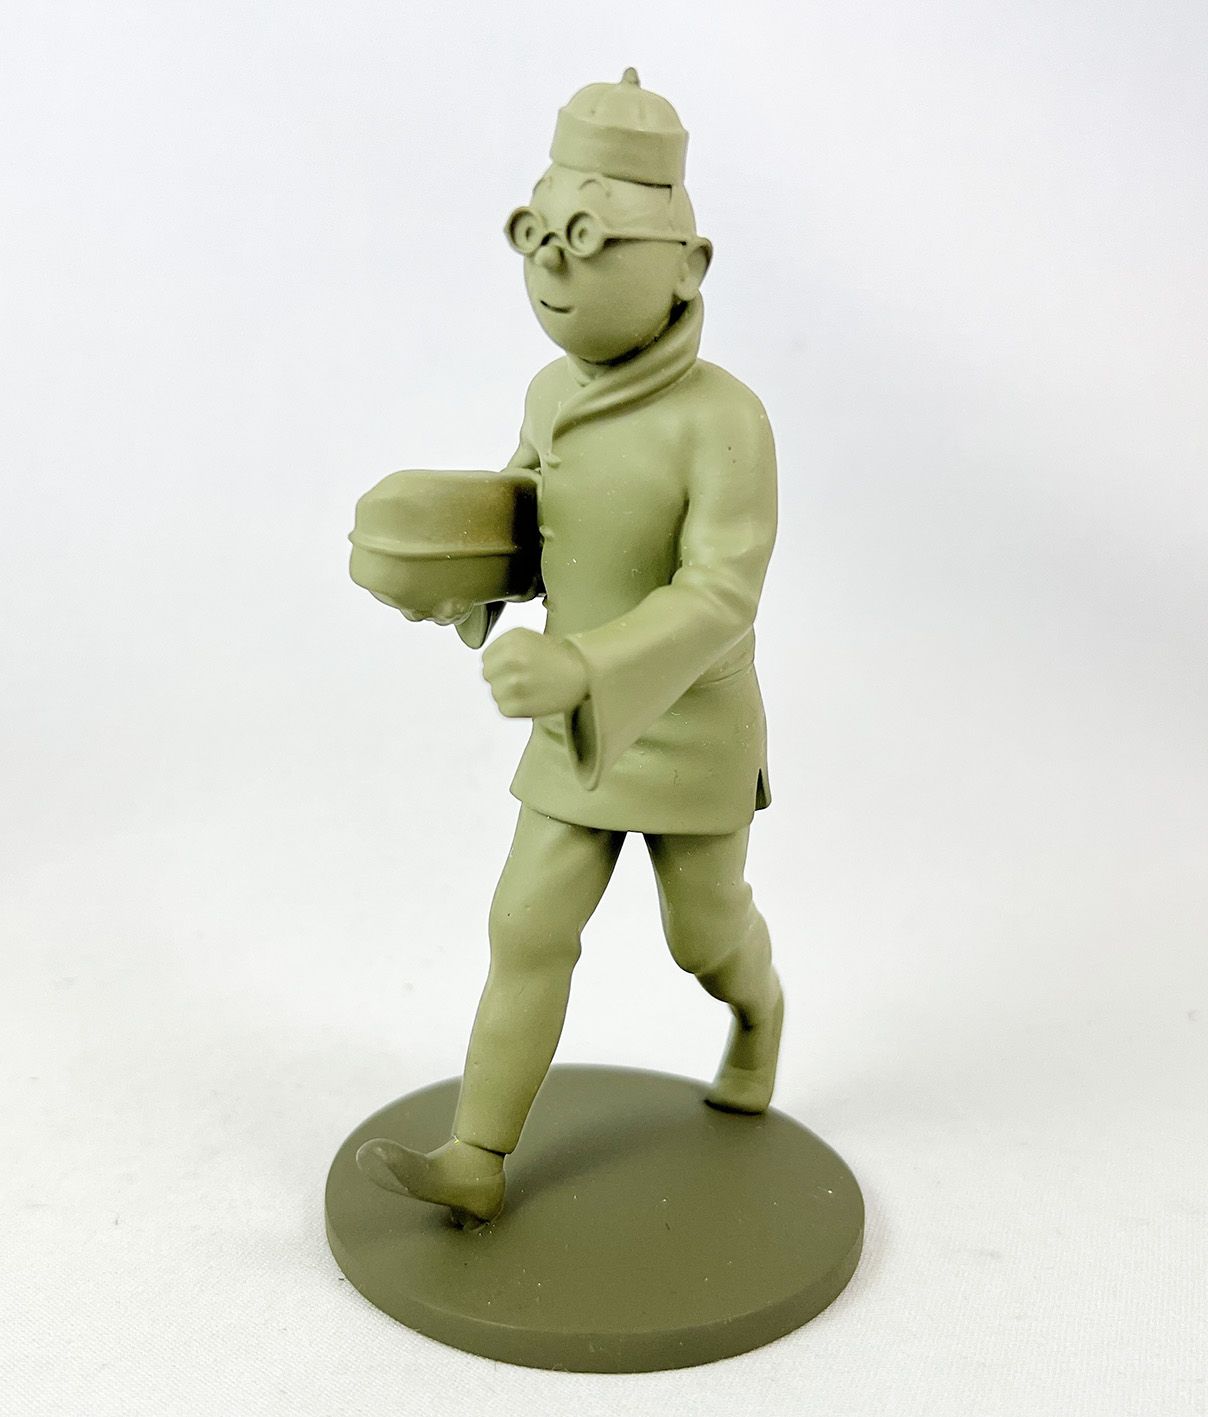 Tintin - Collection Officielle des Figurines Moulinsart - HS